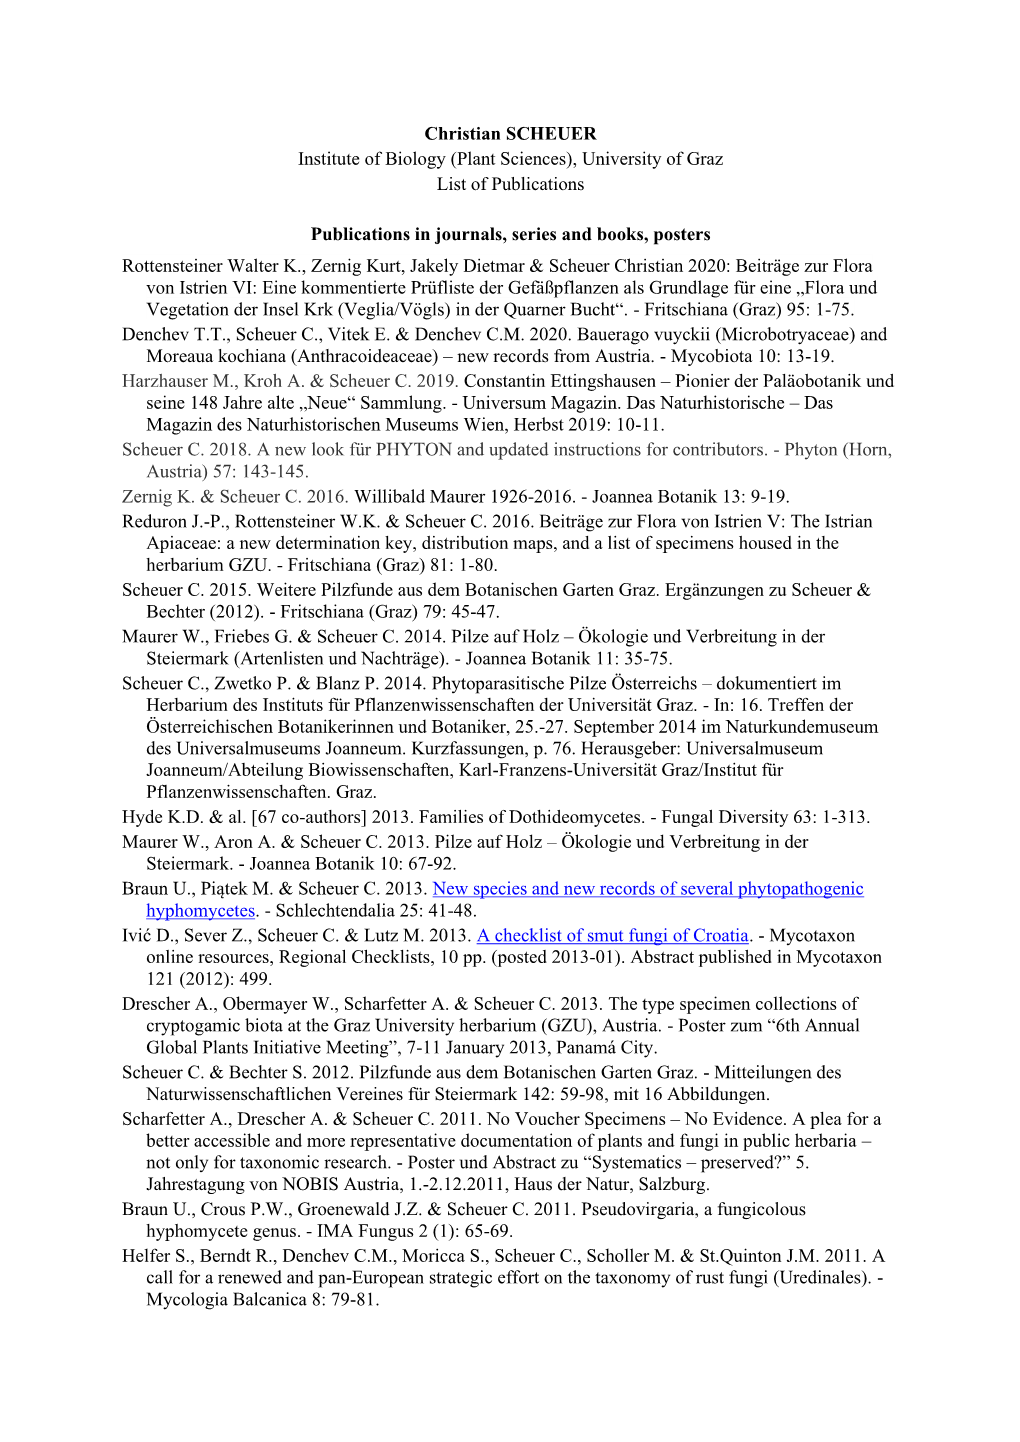 Christian SCHEUER Institute of Biology (Plant Sciences), University of Graz List of Publications